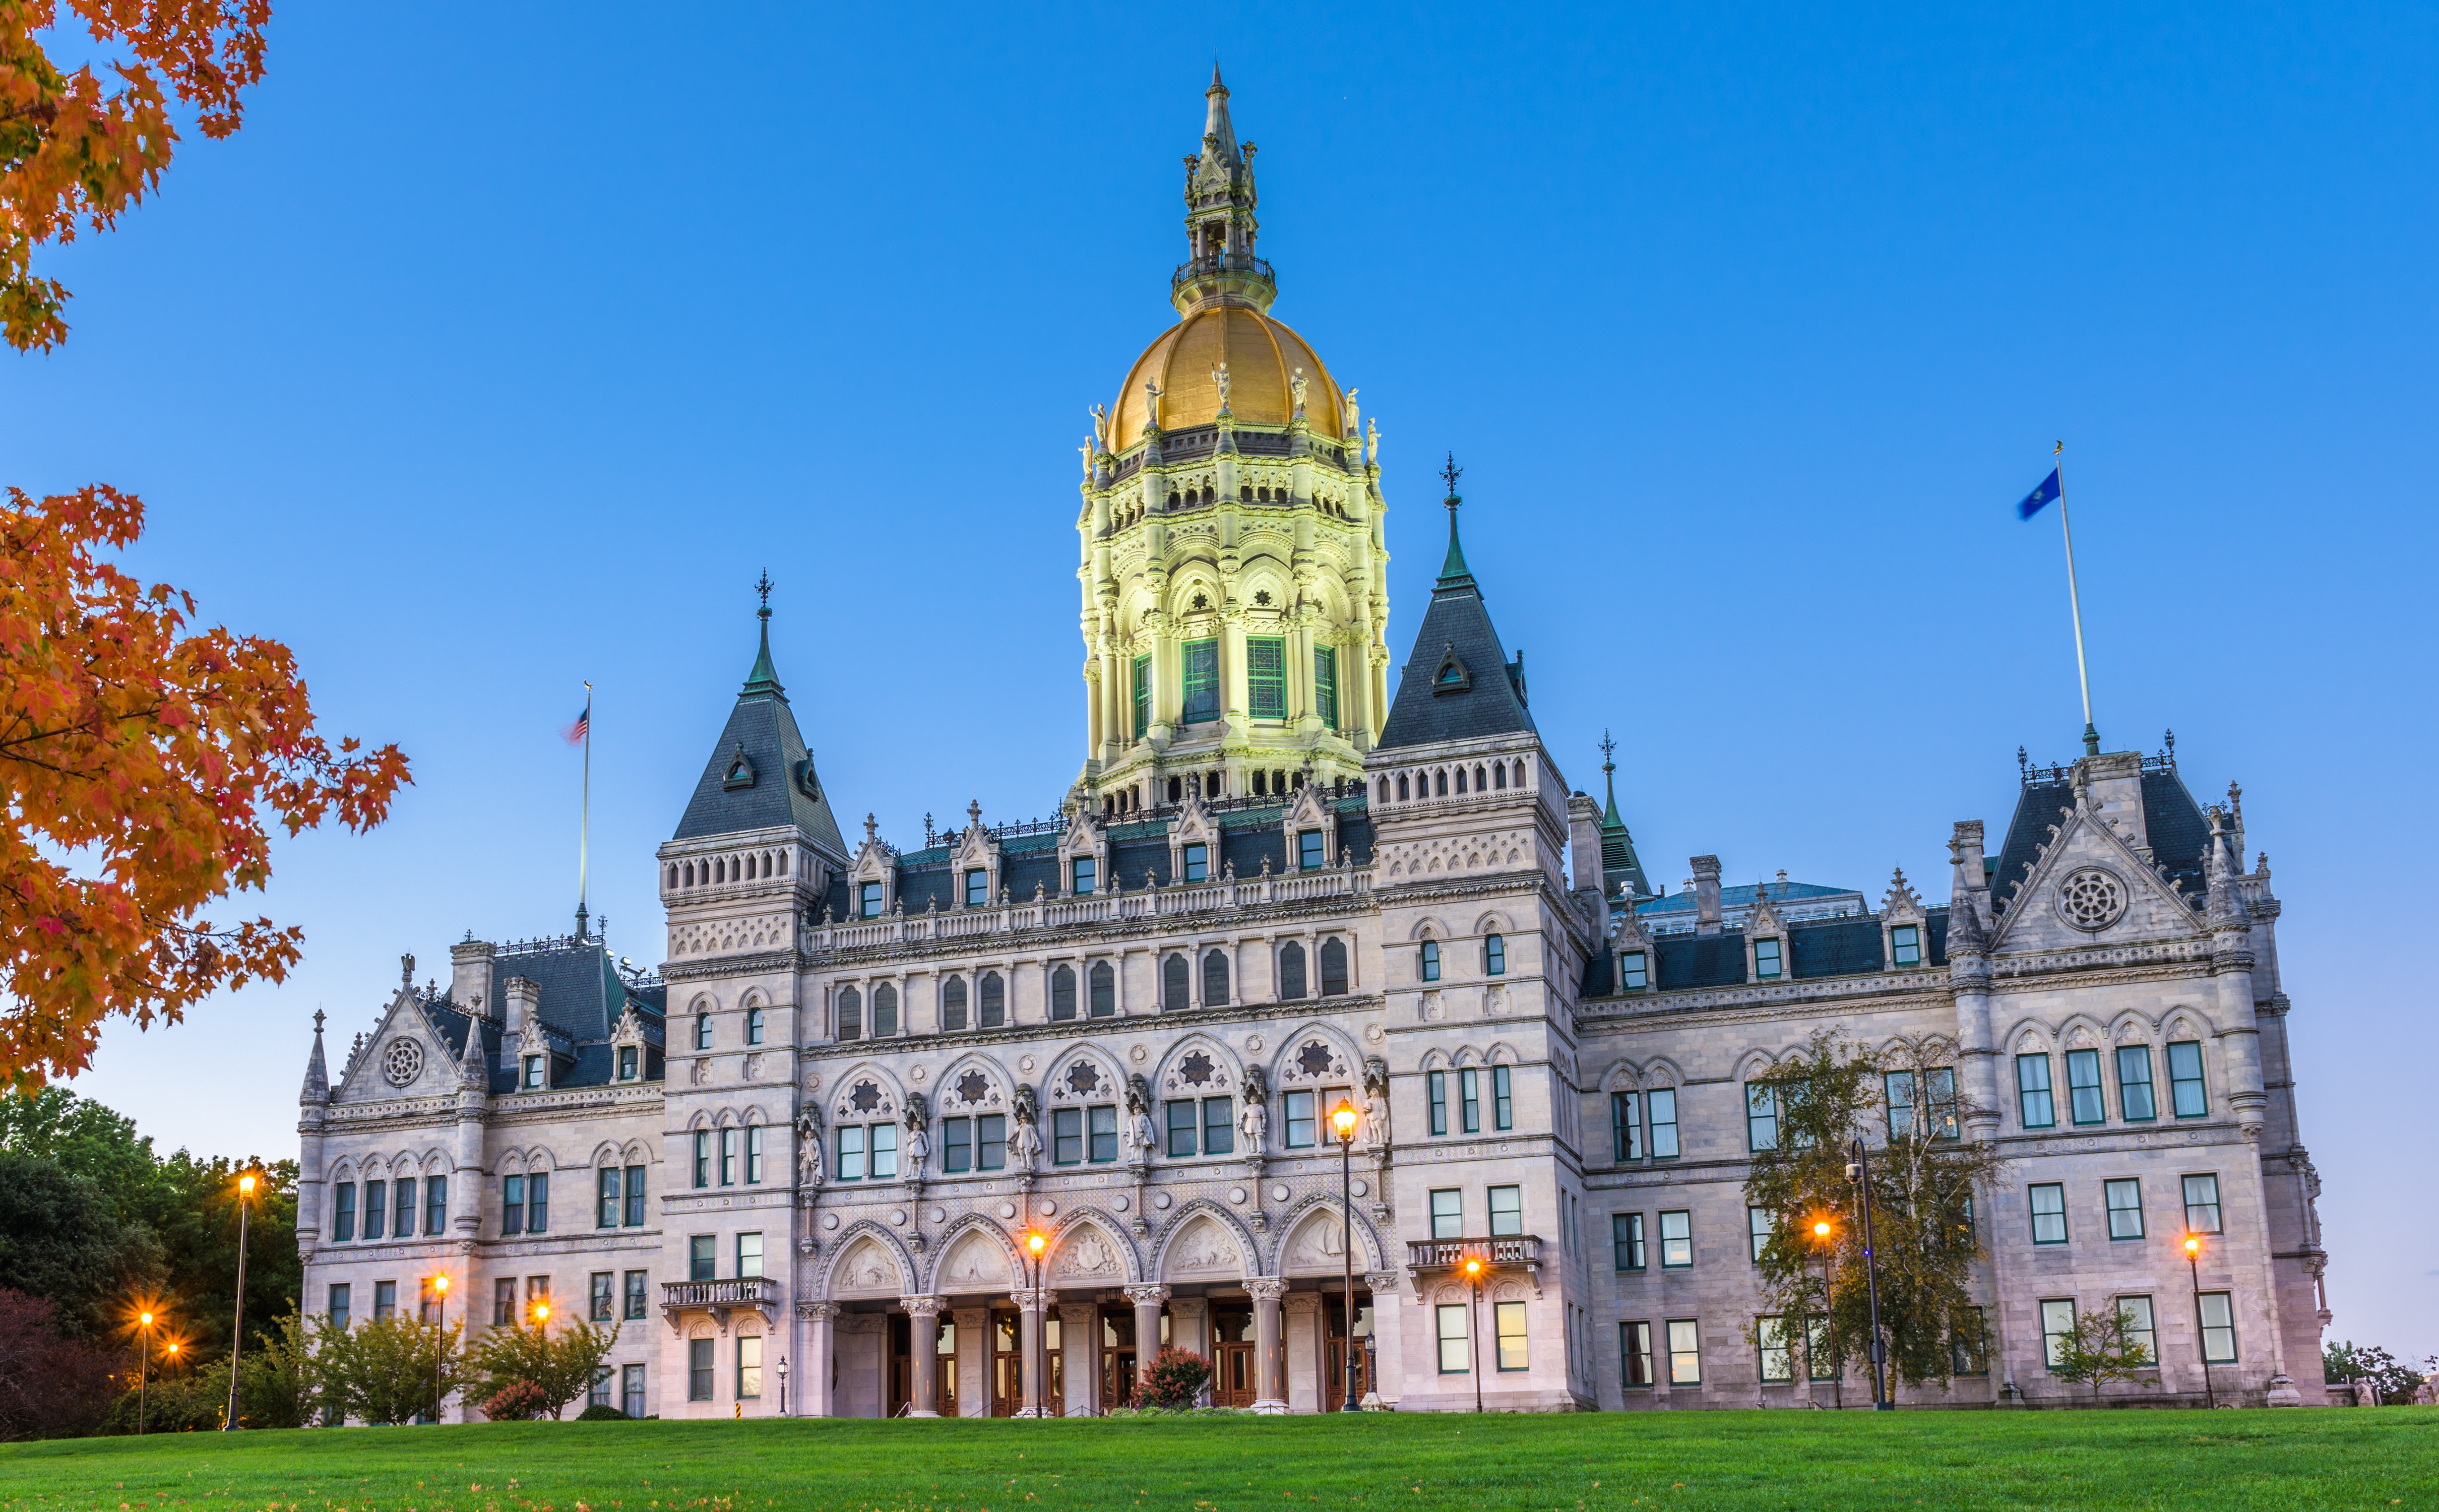 Connecticut State Capitol - NAIFA's Legislative Day on the Hill in Hartford